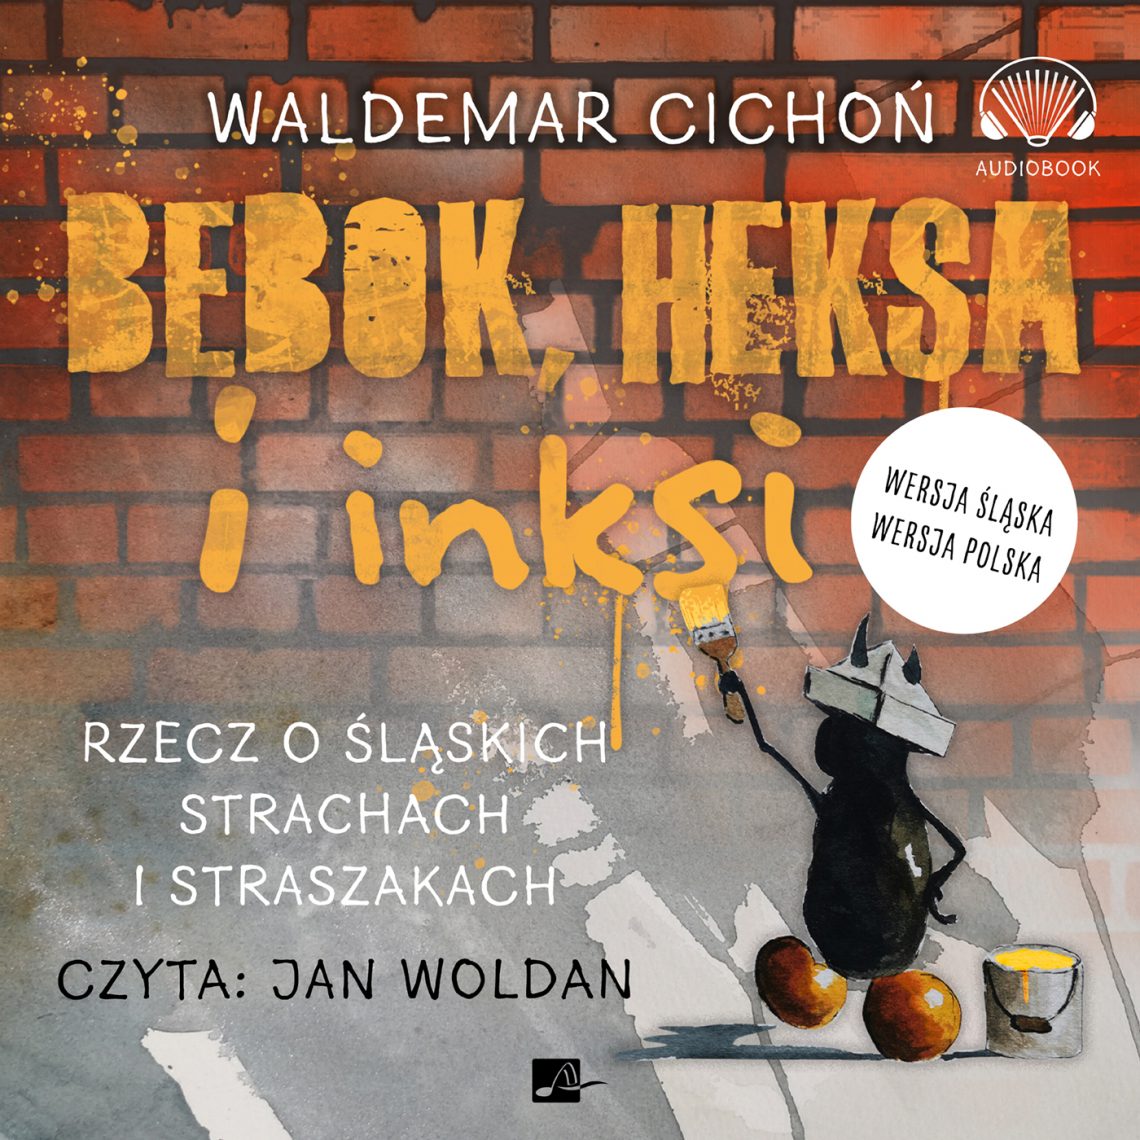 Cichoń Waldemar - Bebok, Heksa I Inksi